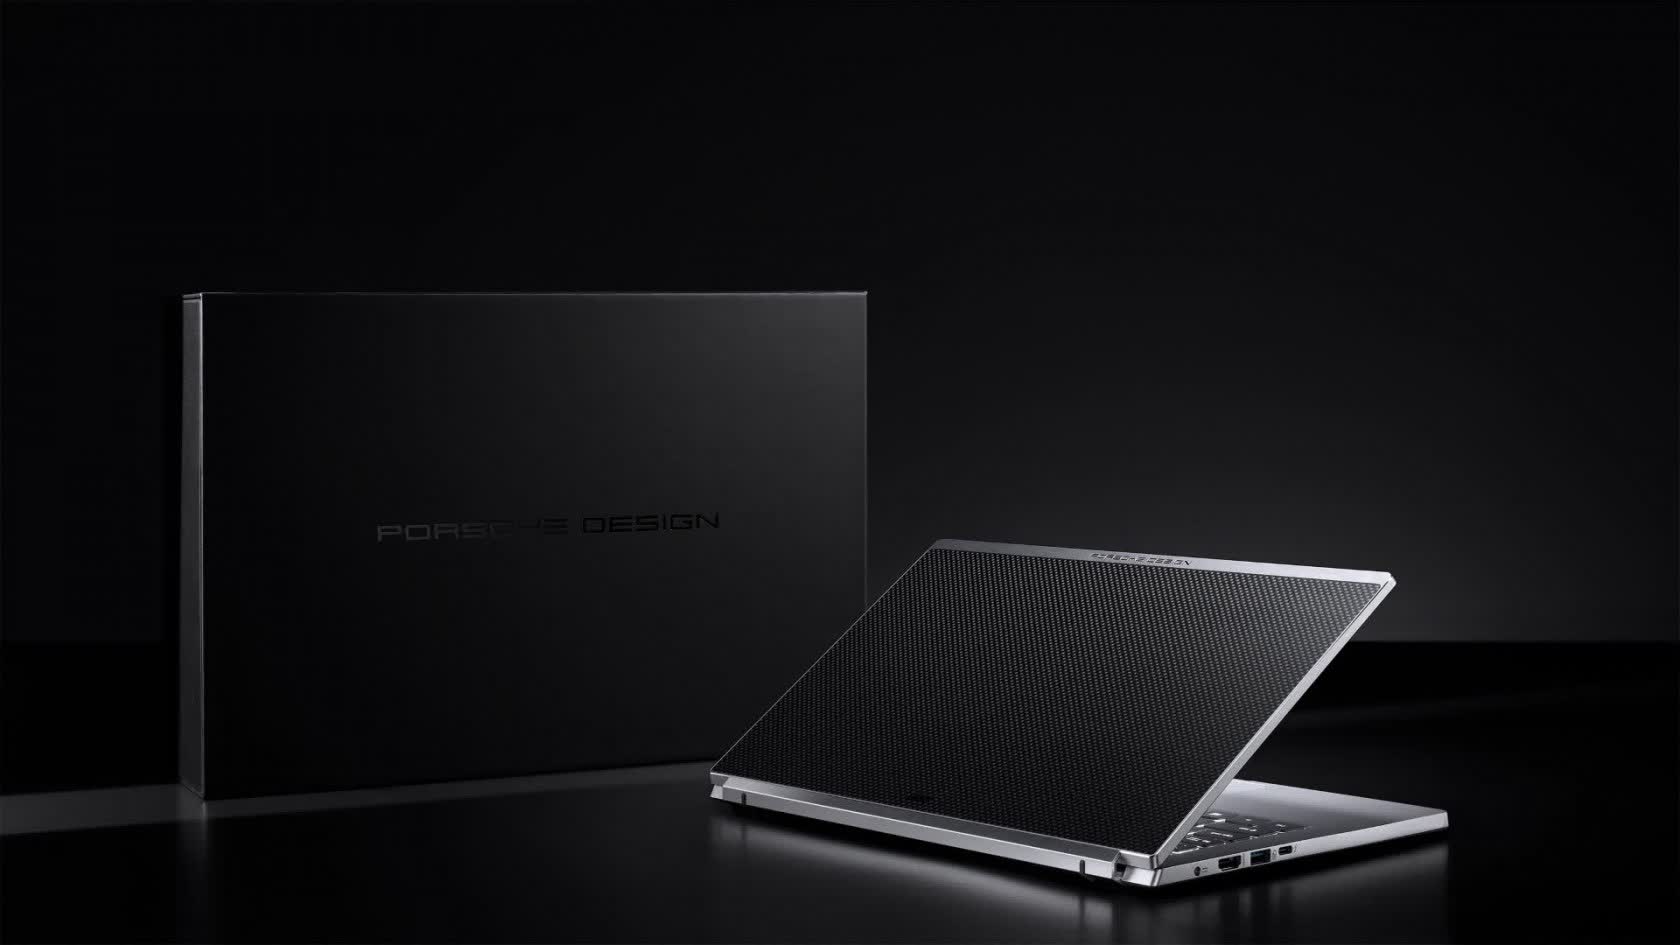 Acer partners with Porsche Design to create a sleek, high-class notebook for $1,399